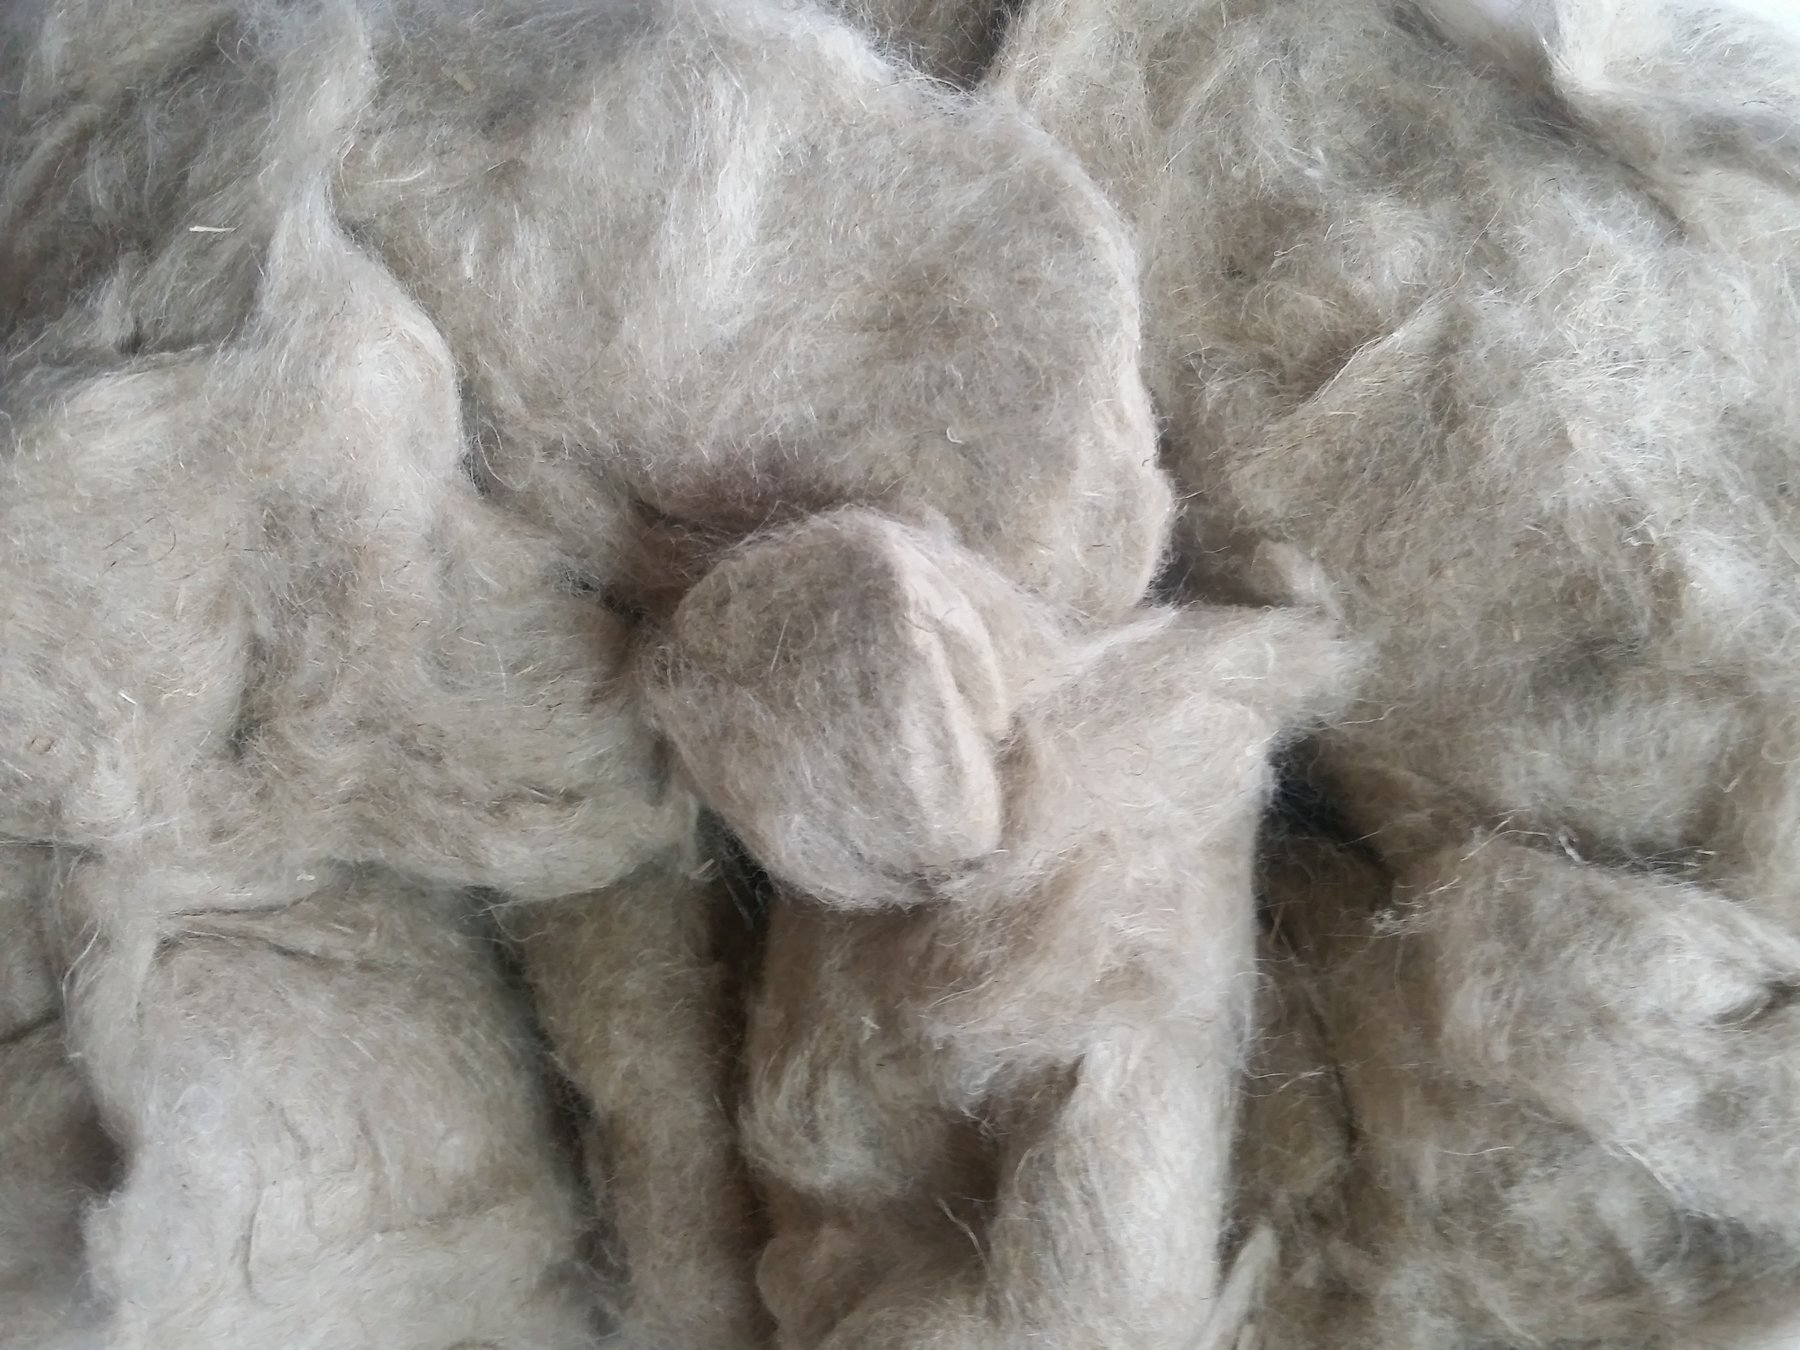 Cottonized flax fibres